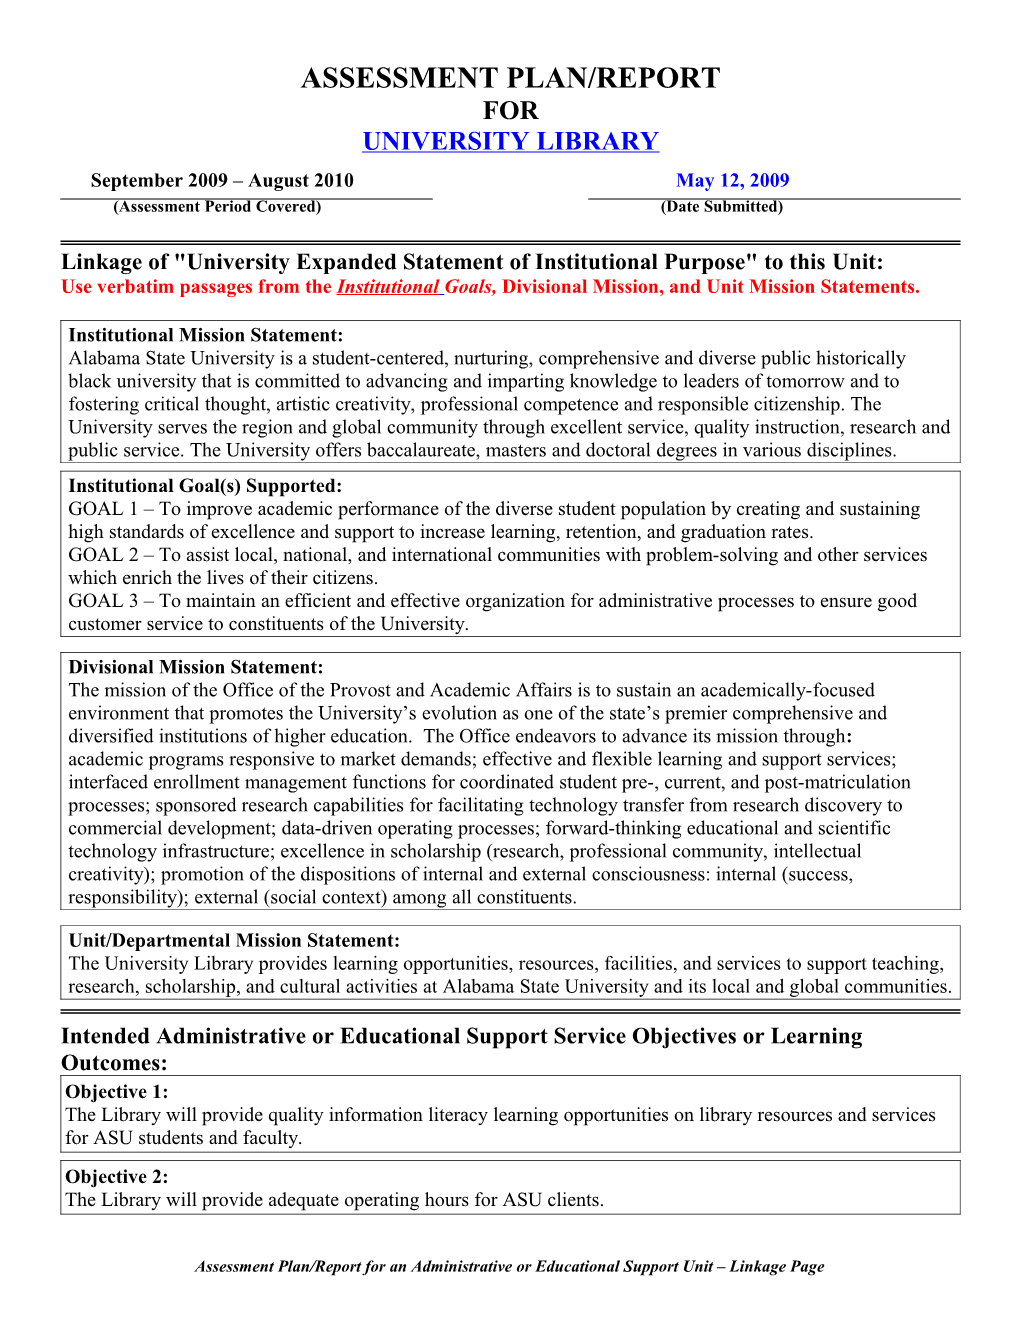 Assessment Plan/Report